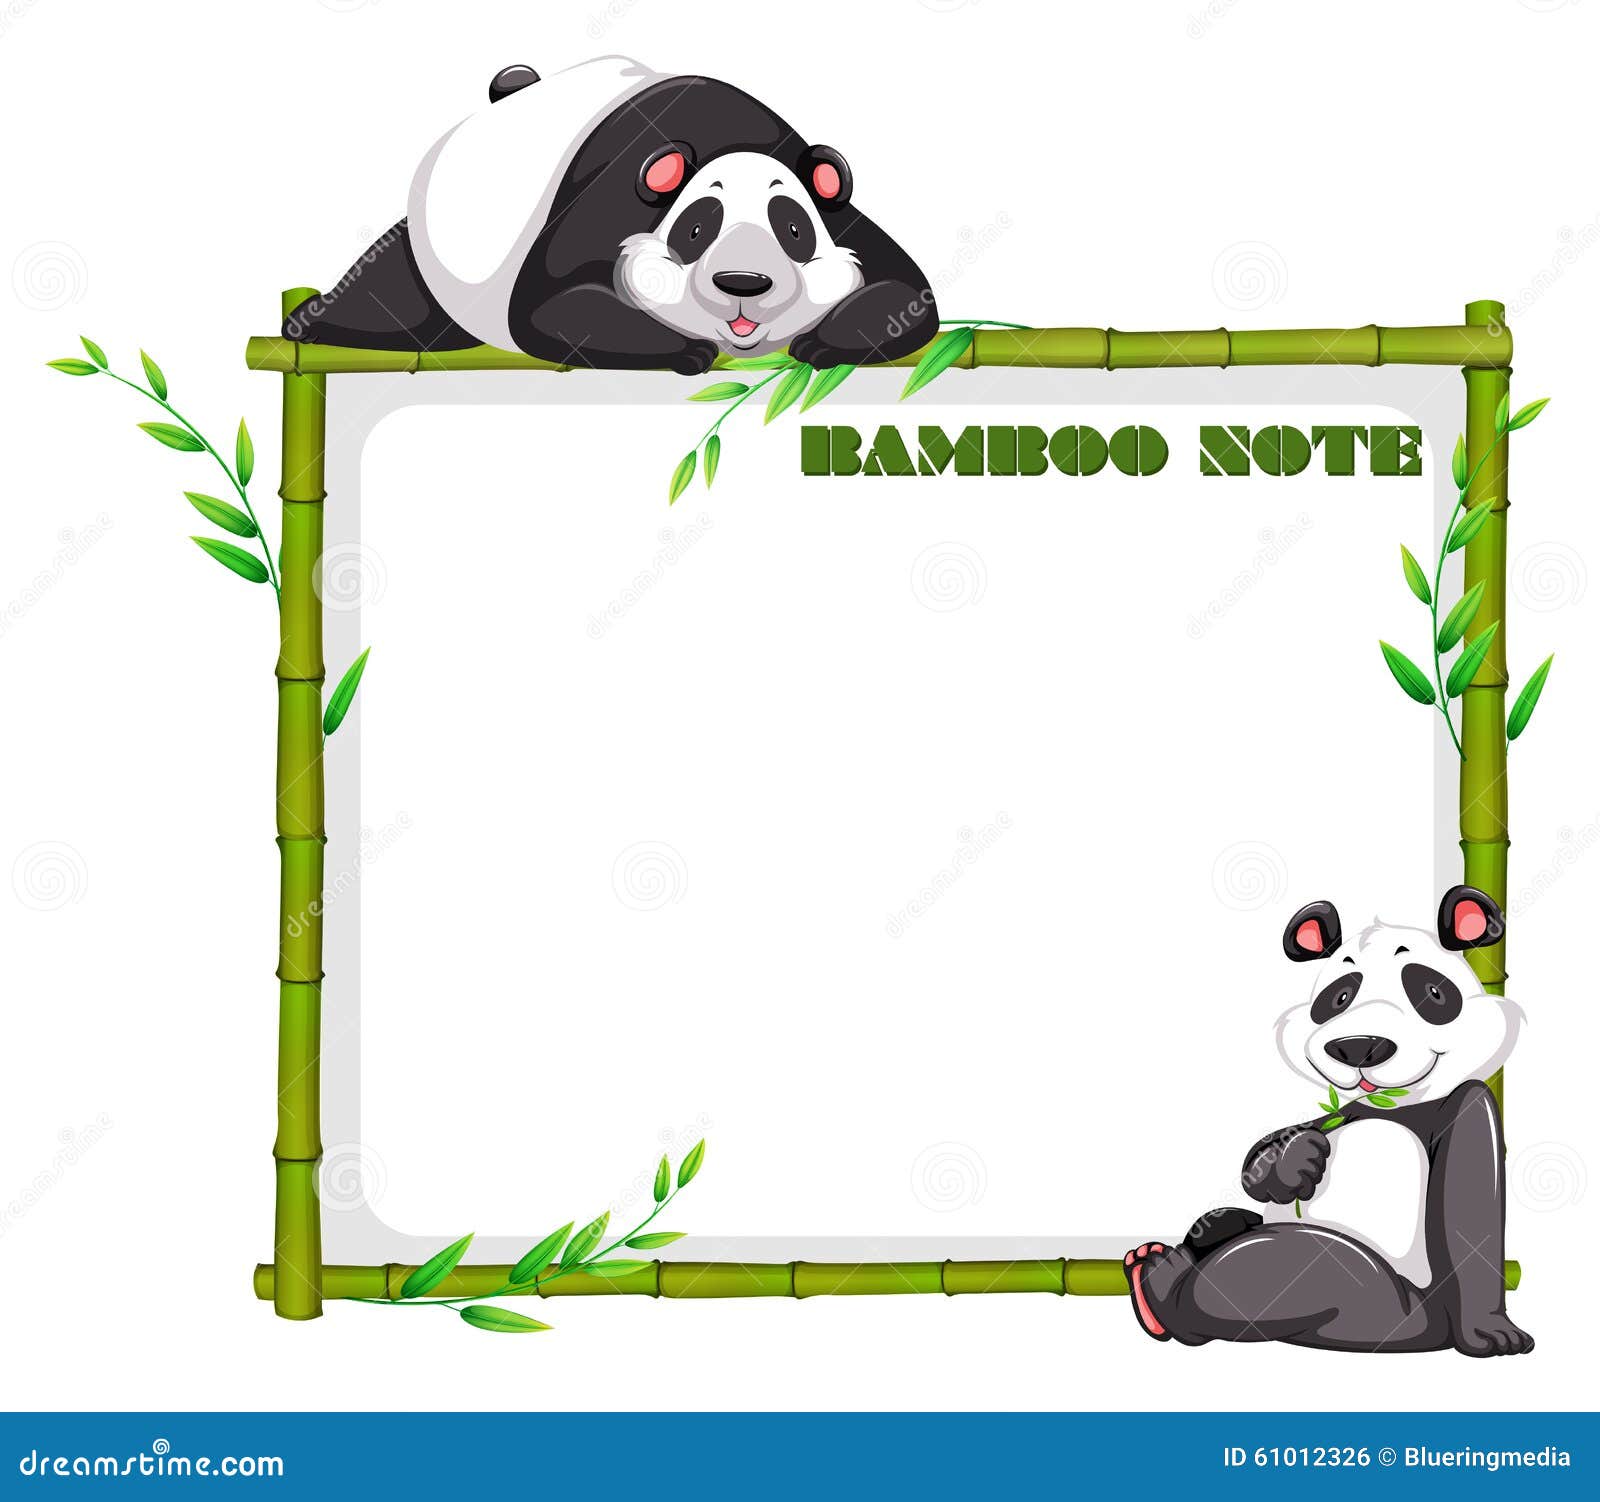 clipart panda frame - photo #15